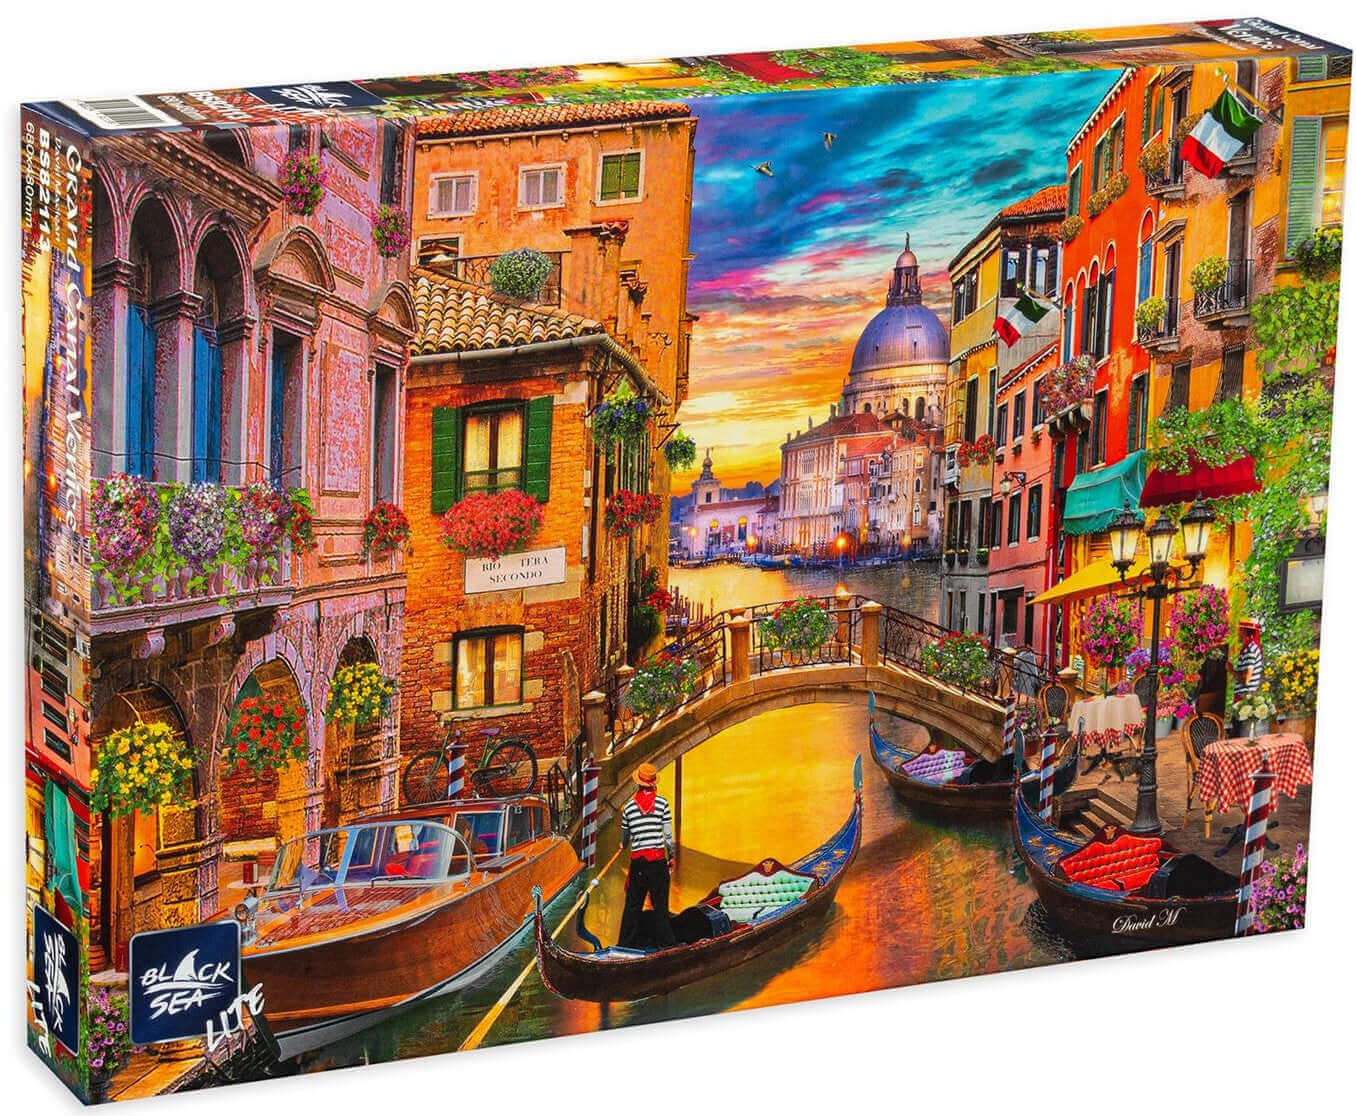 Puzzle Black Sea 1000 pieces - Grand Canal Venice